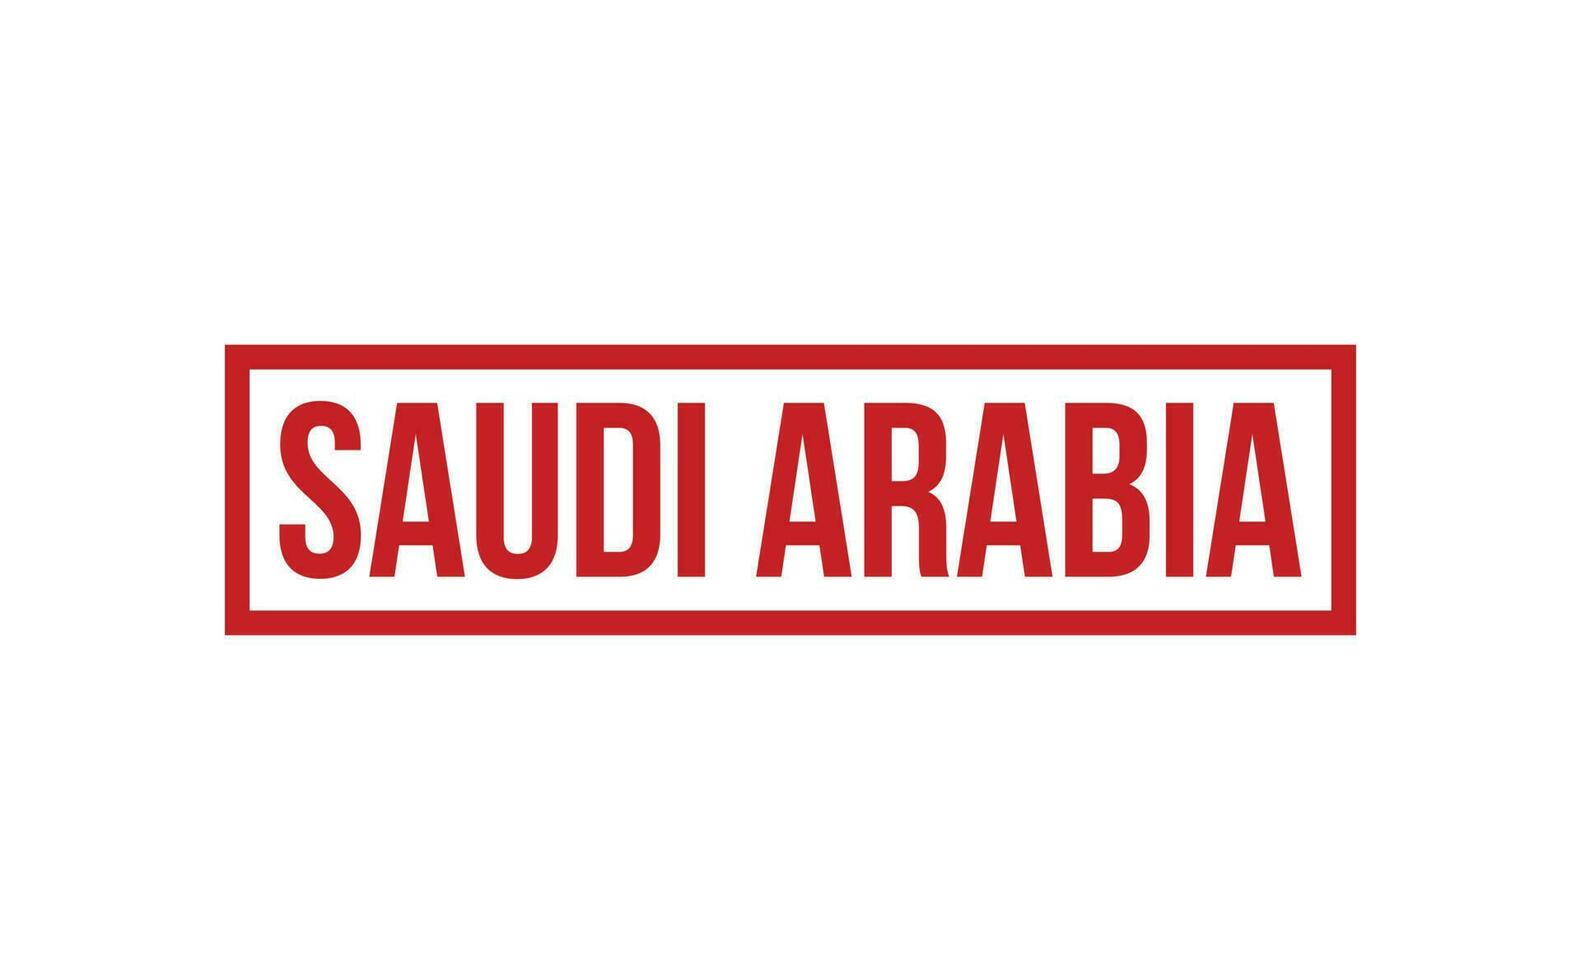 saudita arábia borracha carimbo foca vetor